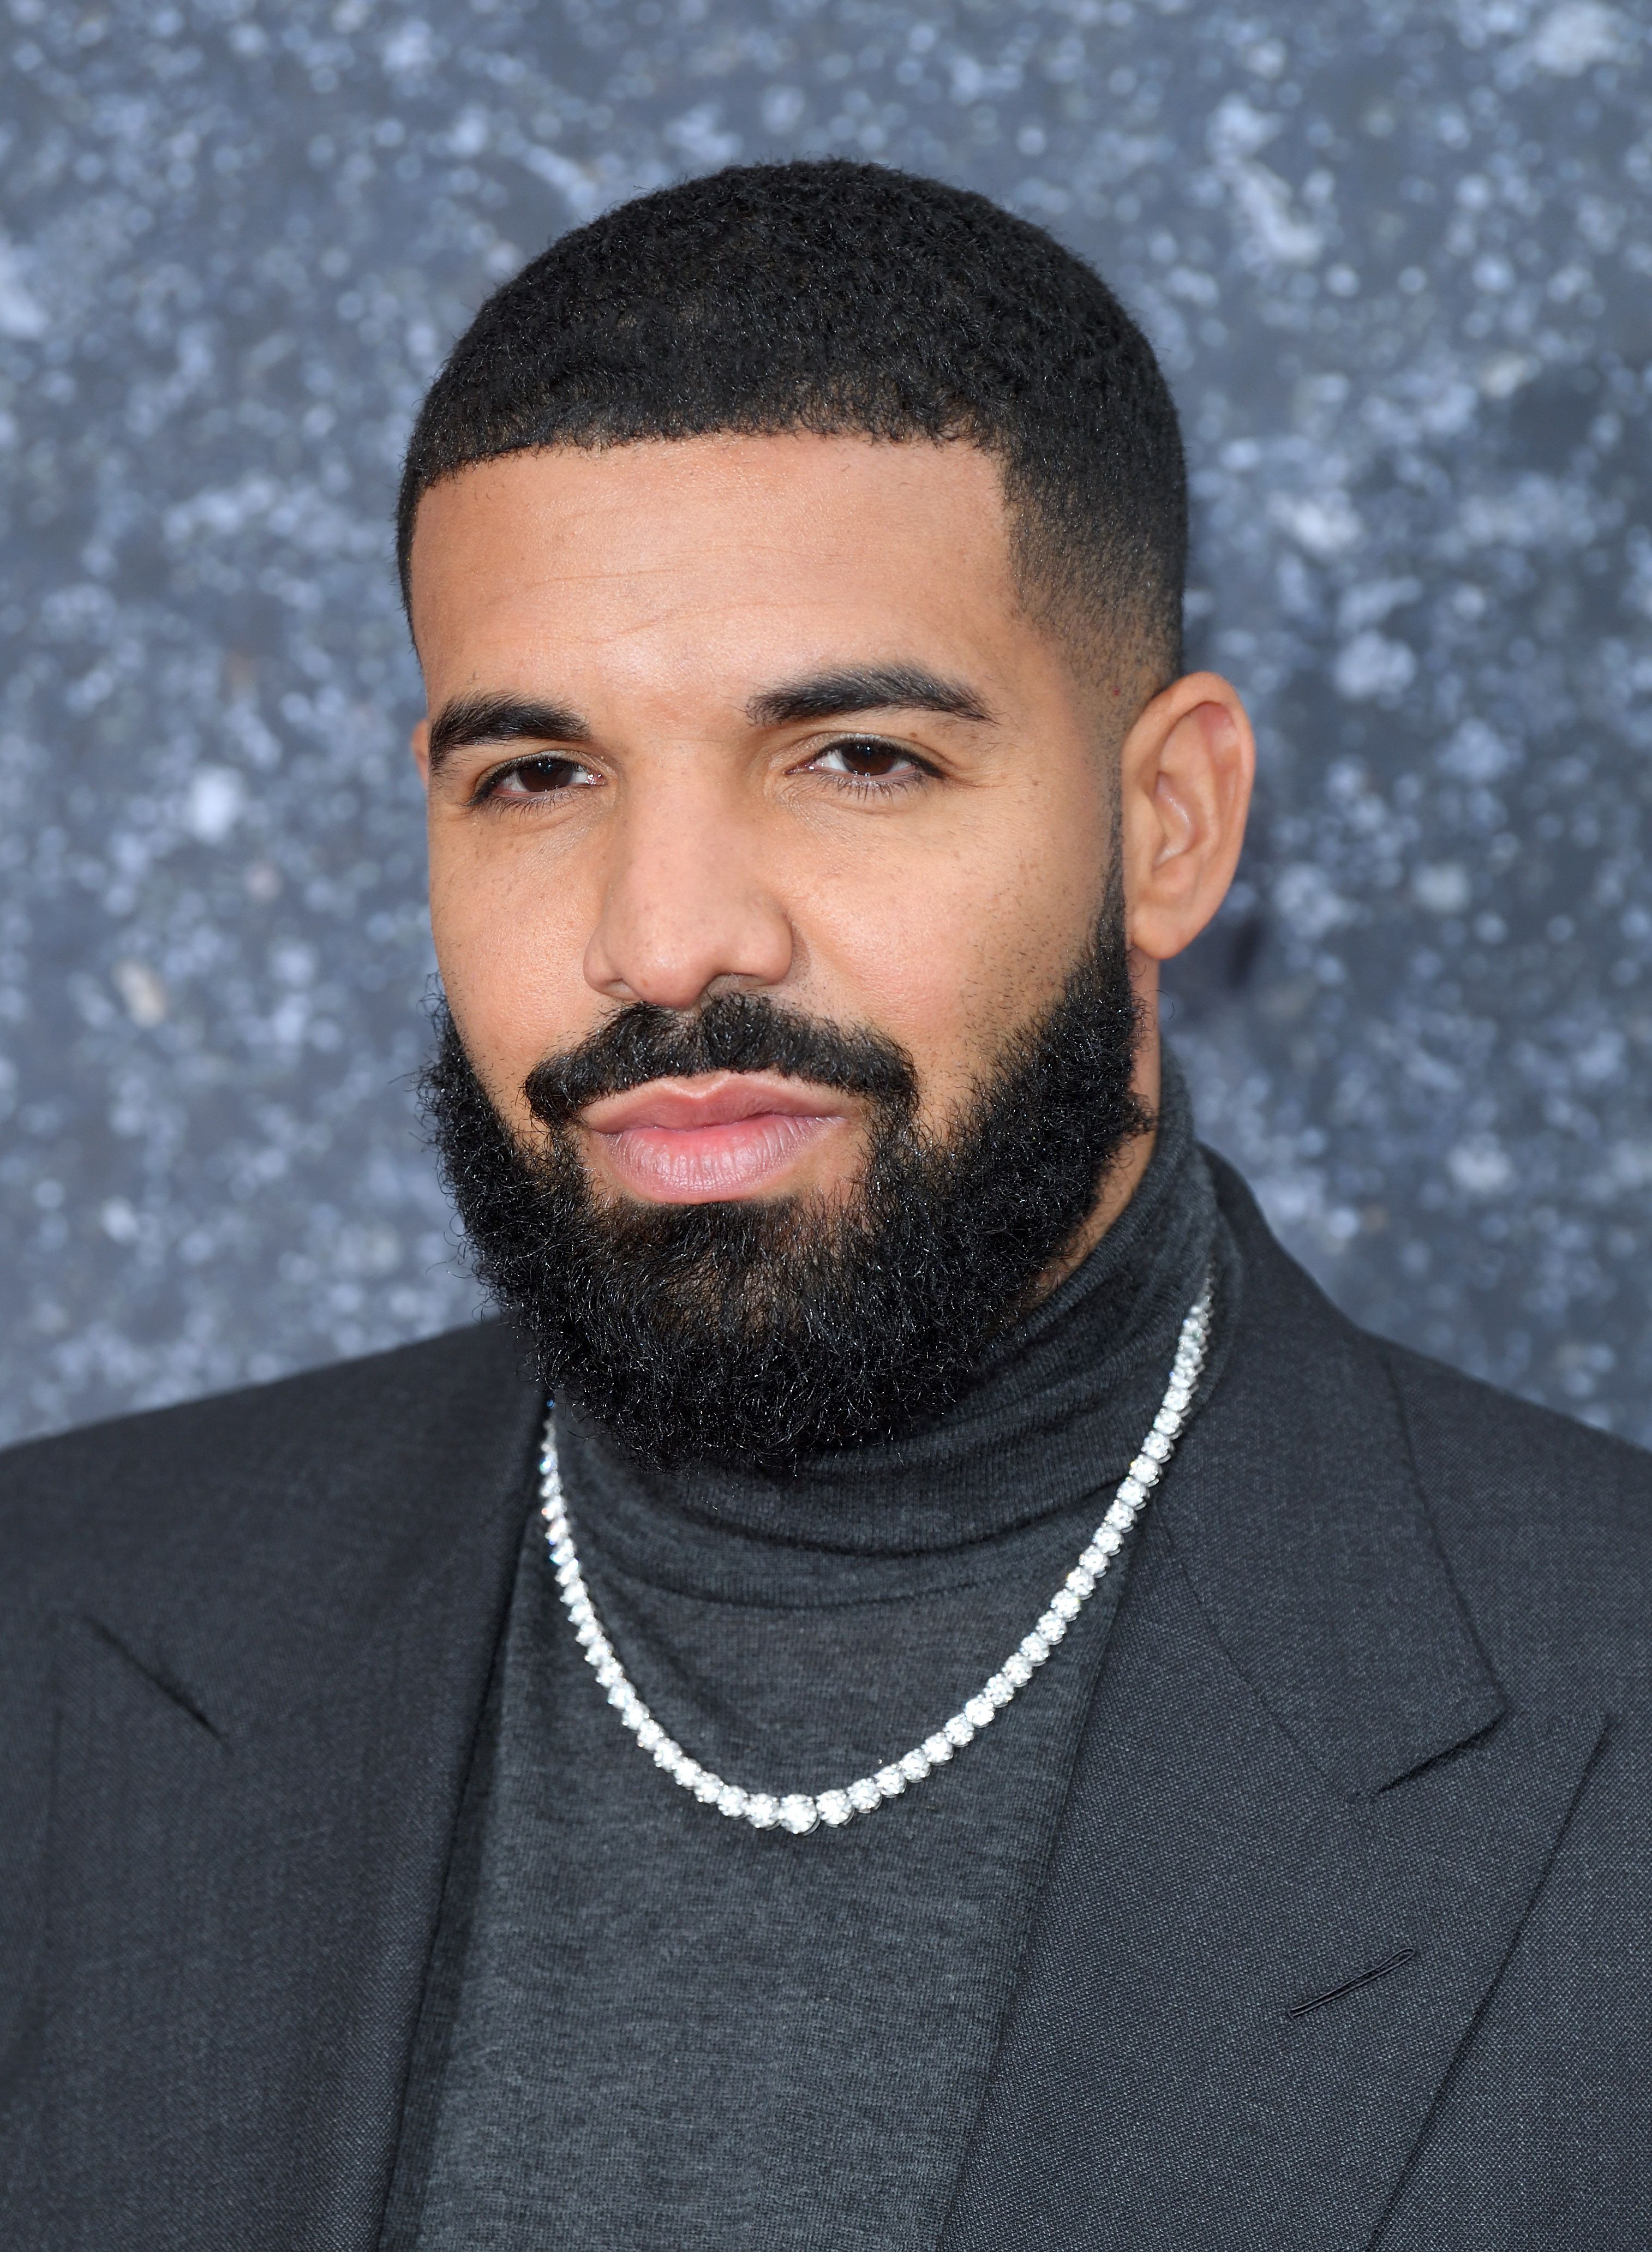 Drake blames COVID for his wonky haircut